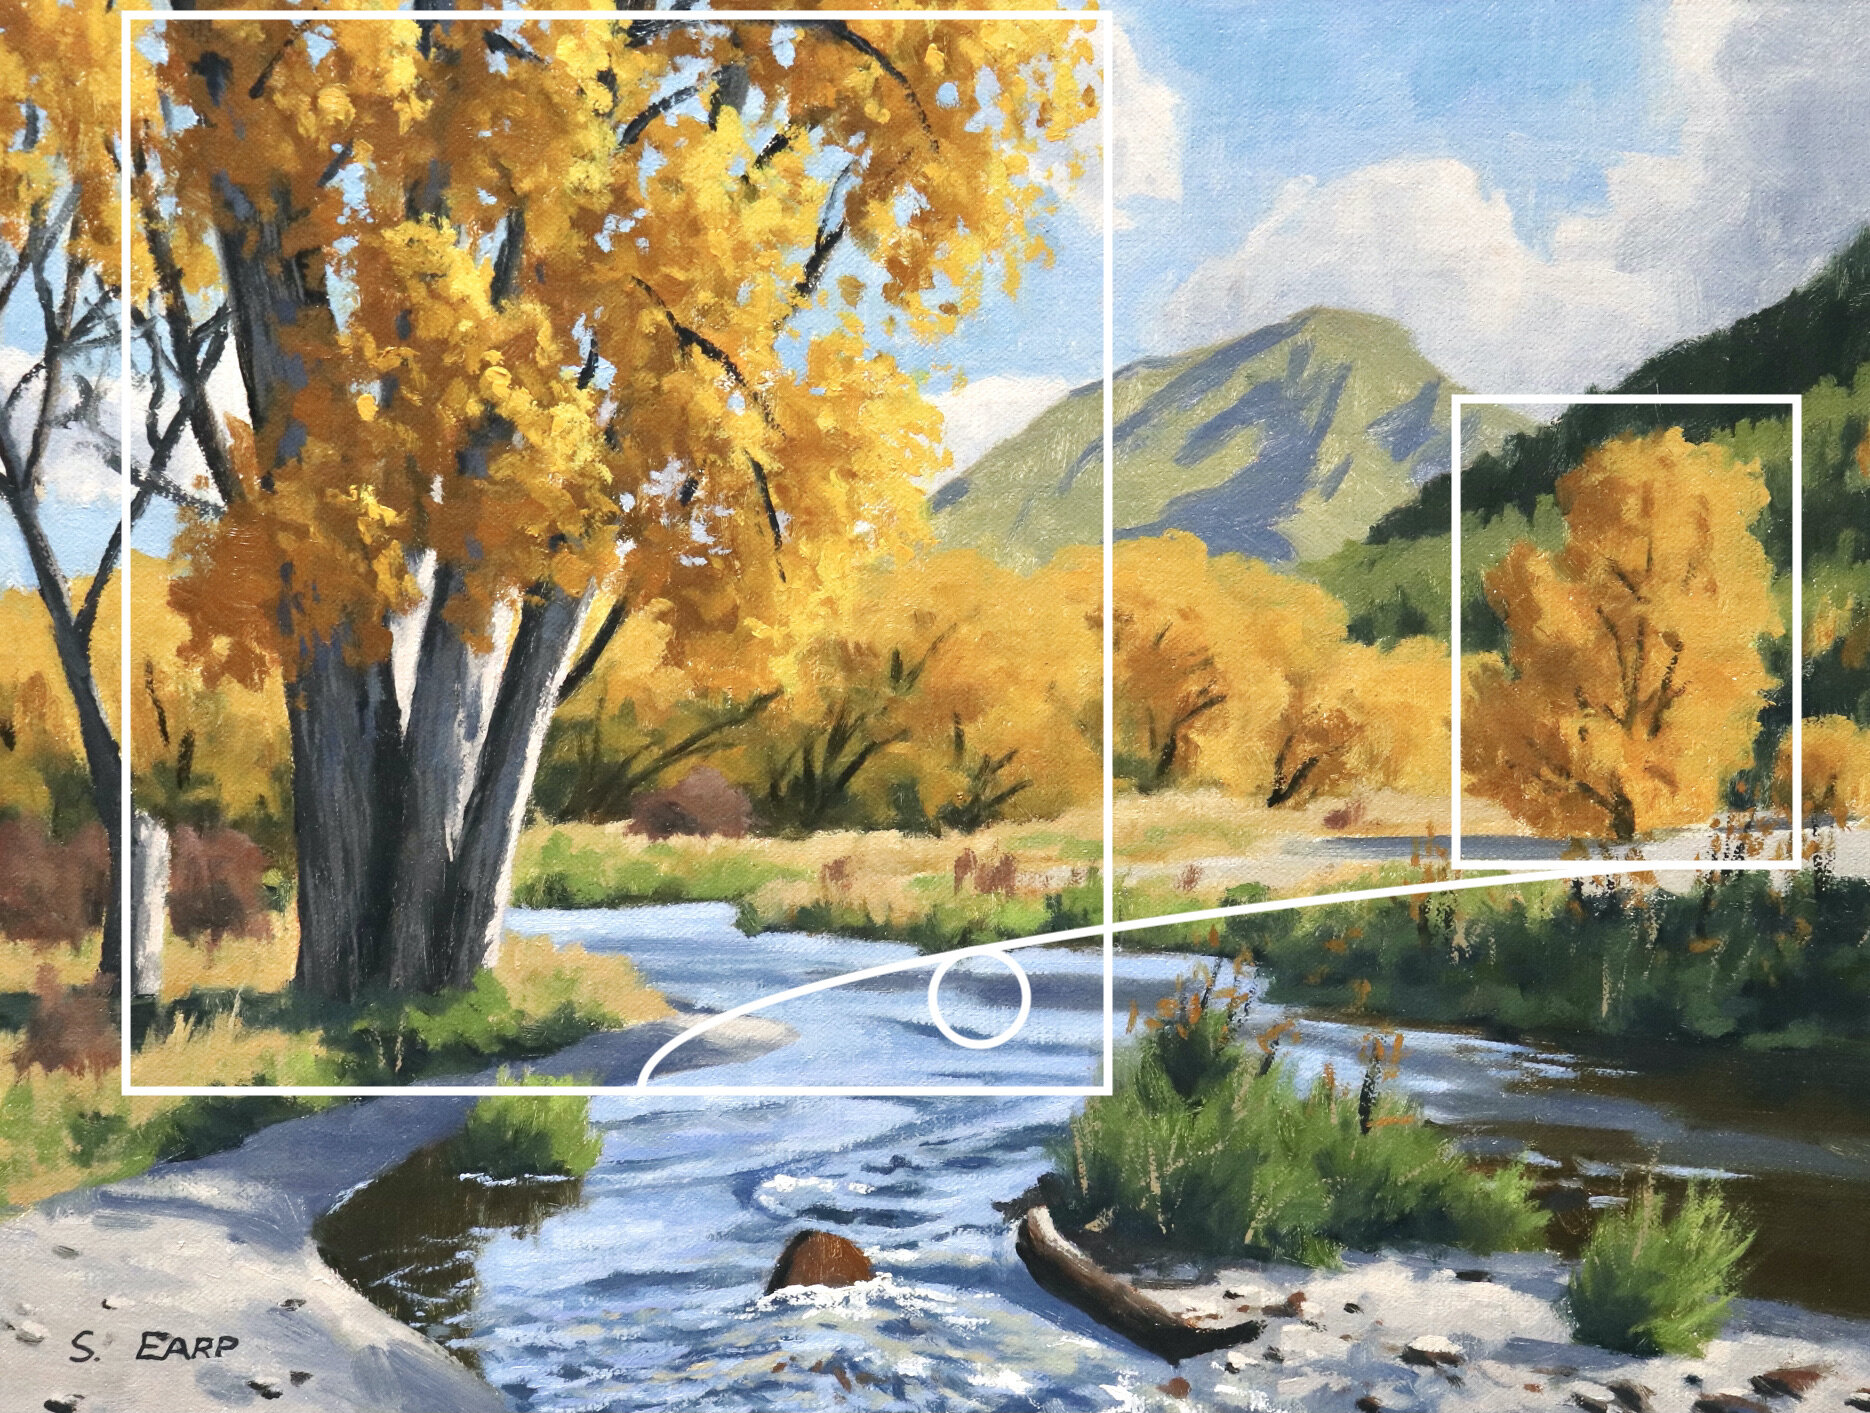 Autumn Poplars and Willows - Arrowtown - Samuel Earp - Oil Painting copy.JPG